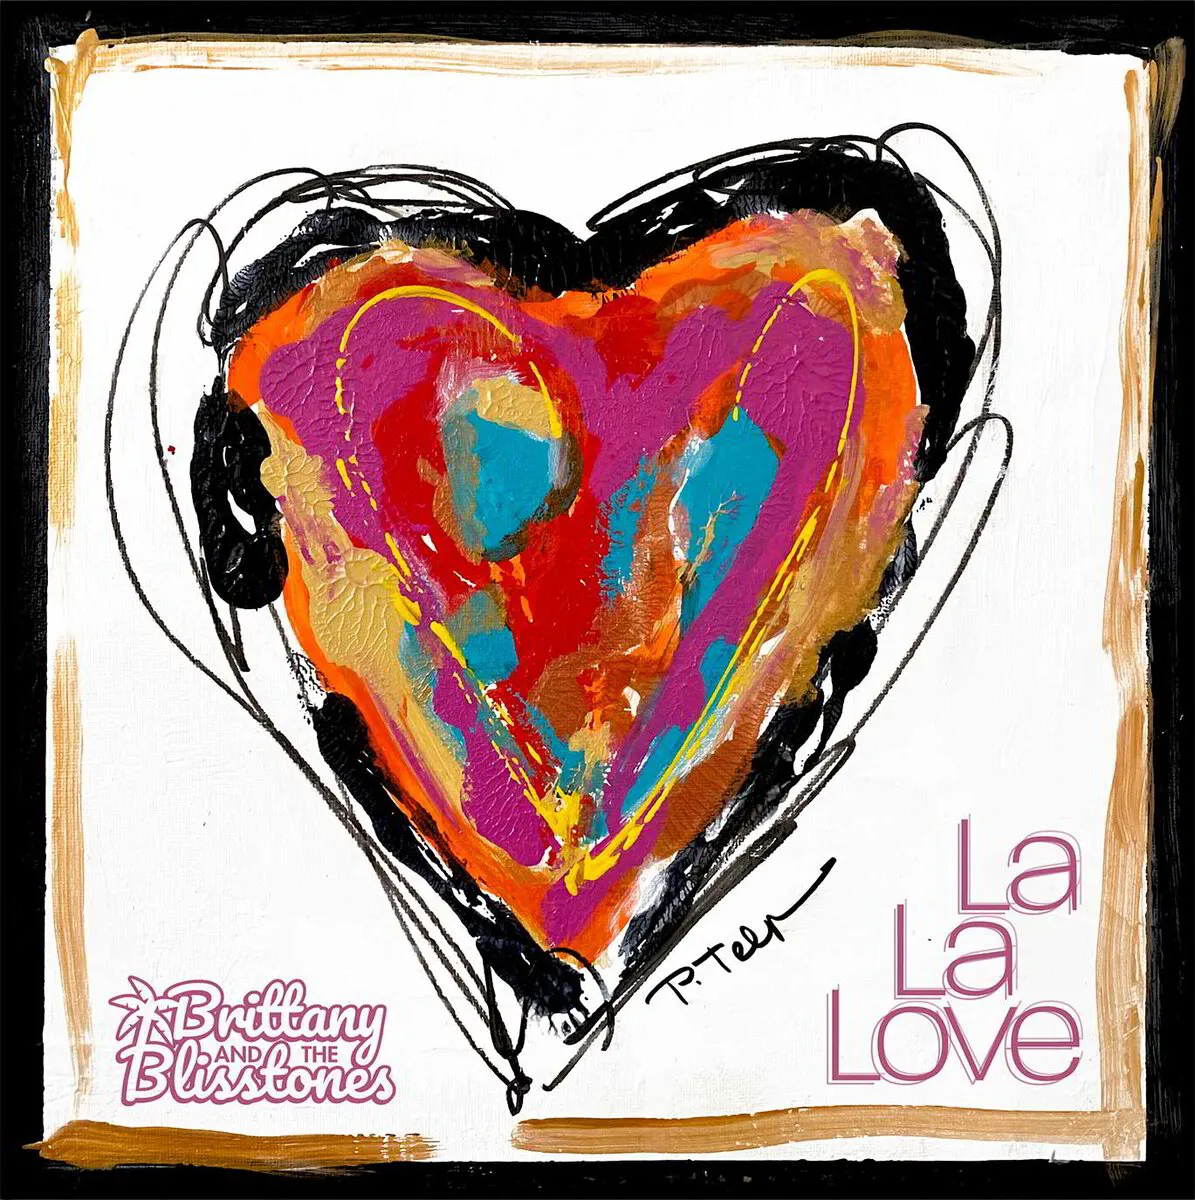 La La Love - Download